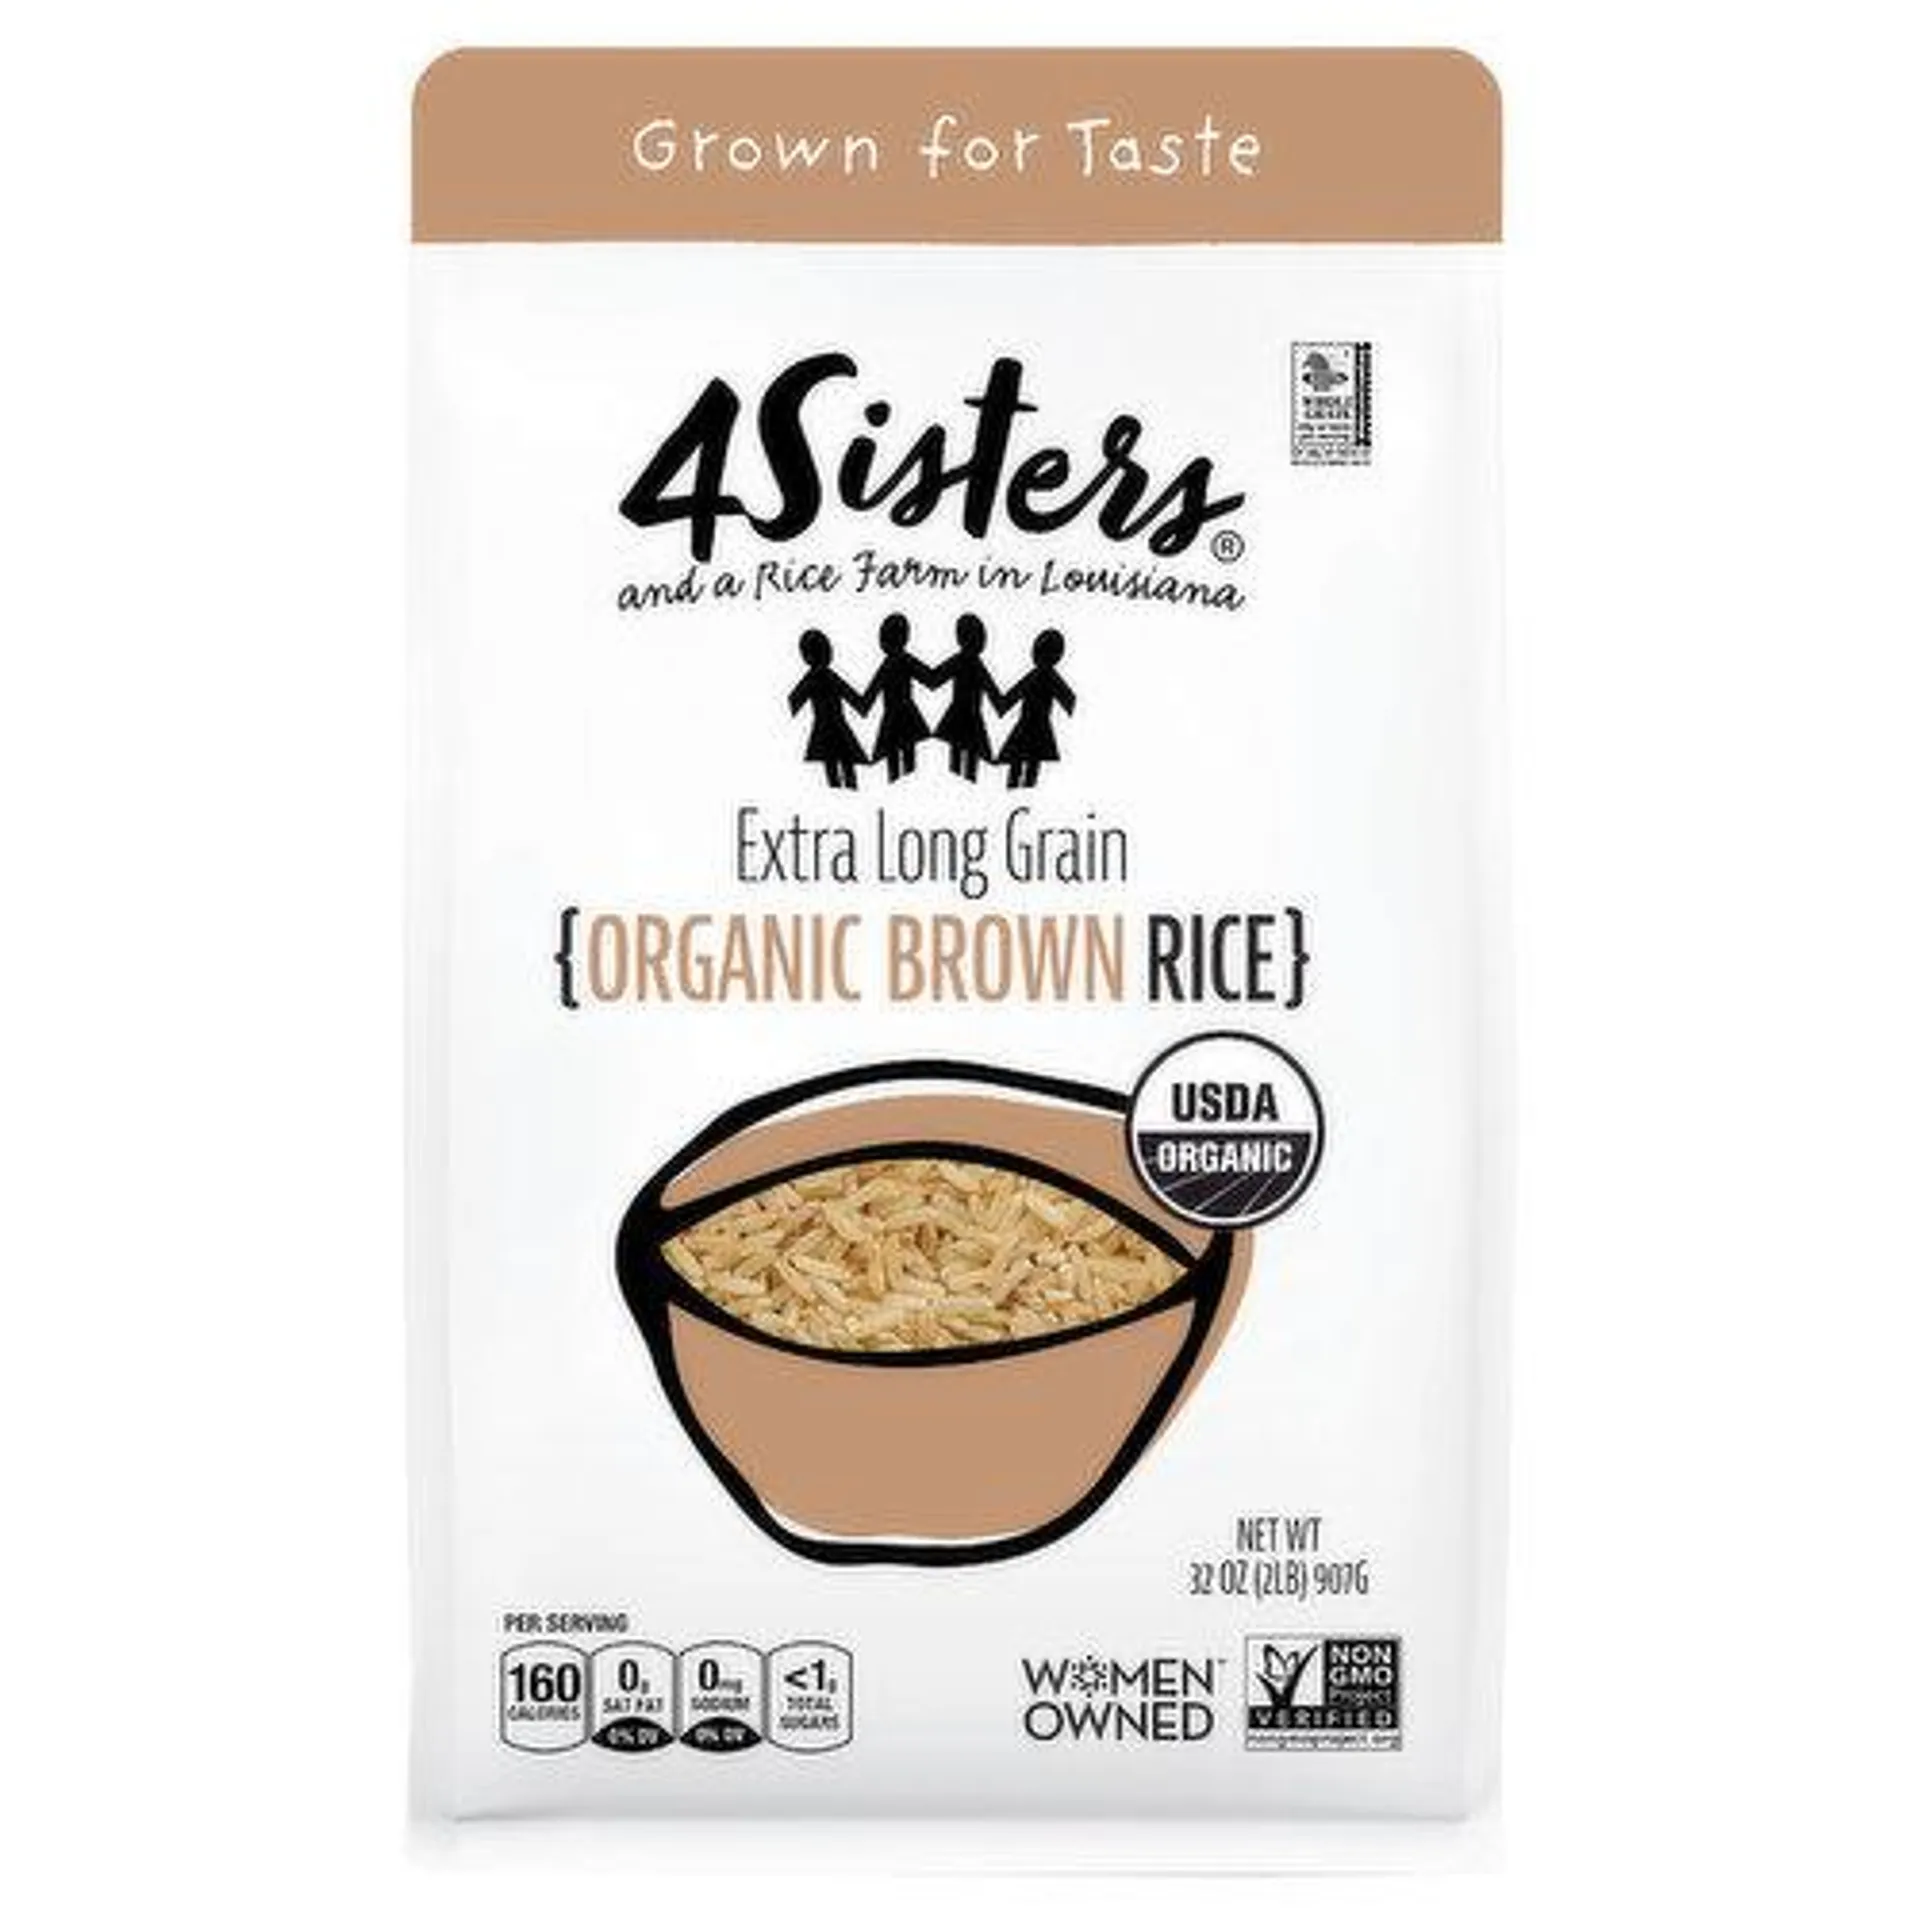 4Sisters Brown Rice, Organic, Long Grain - 32 Ounce